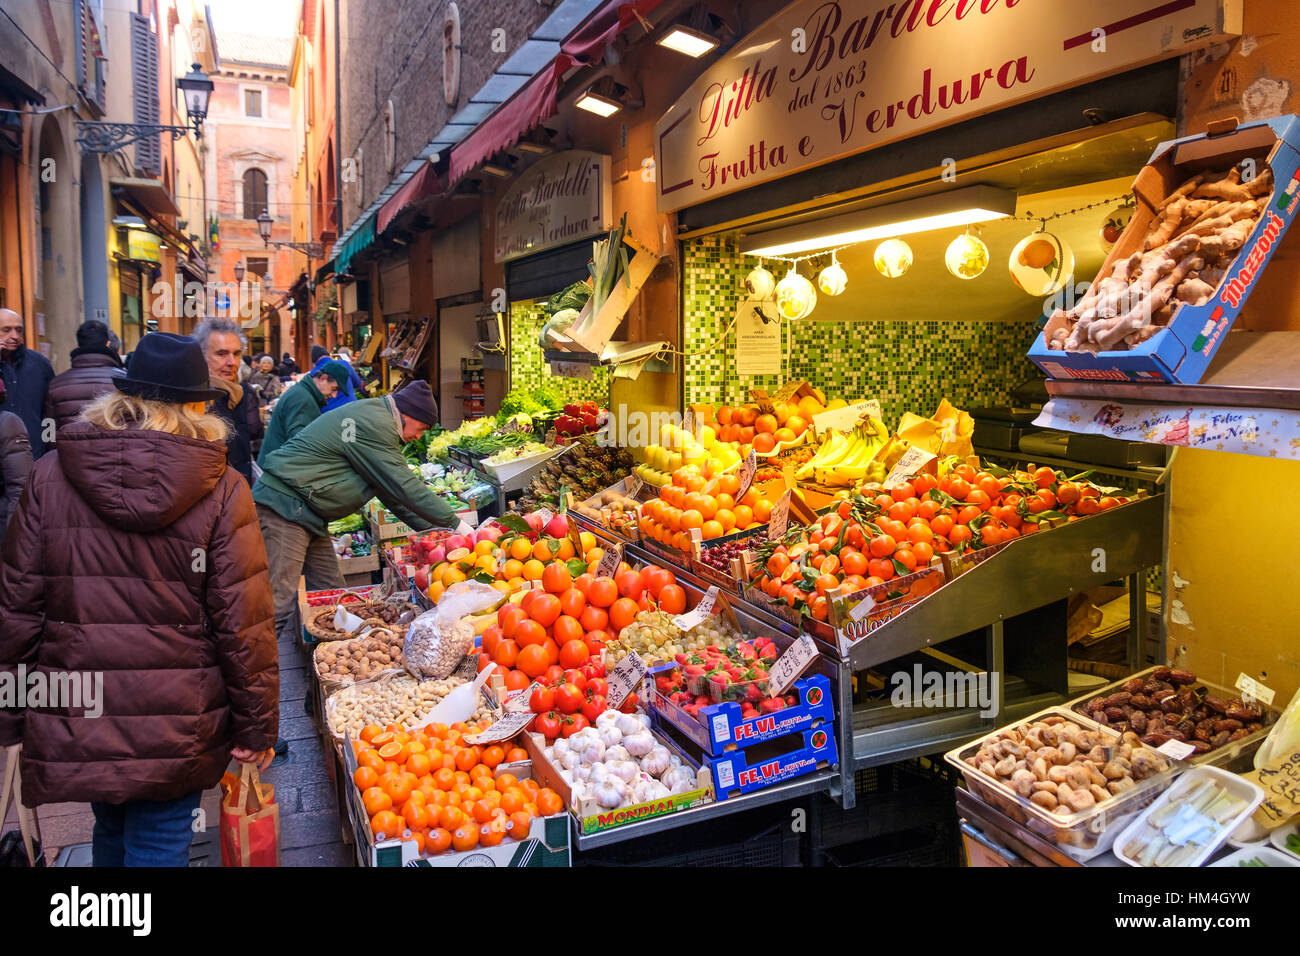 Bologna quadrilatero market italy greengrocers display fruit in Via Pescherie Vecchie Stock Photo